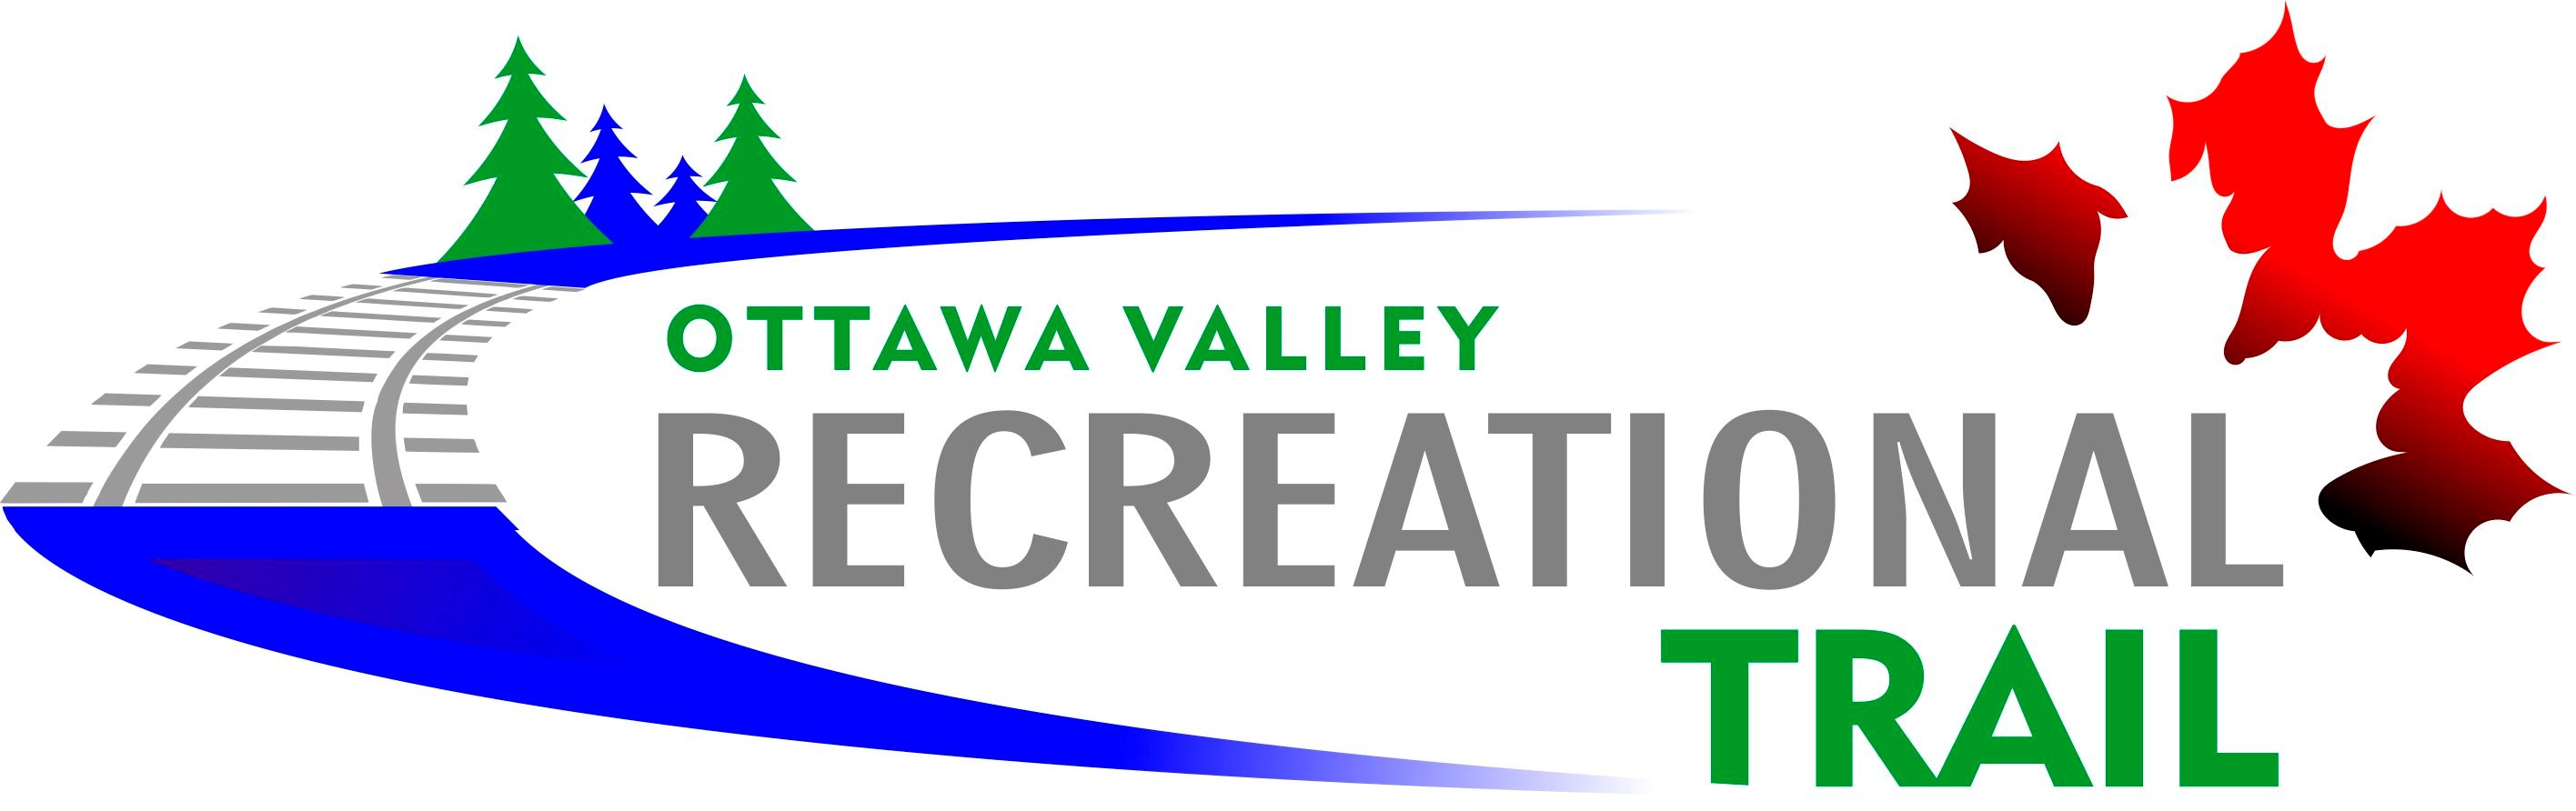 Ottawa Valley Recreation Trail logo